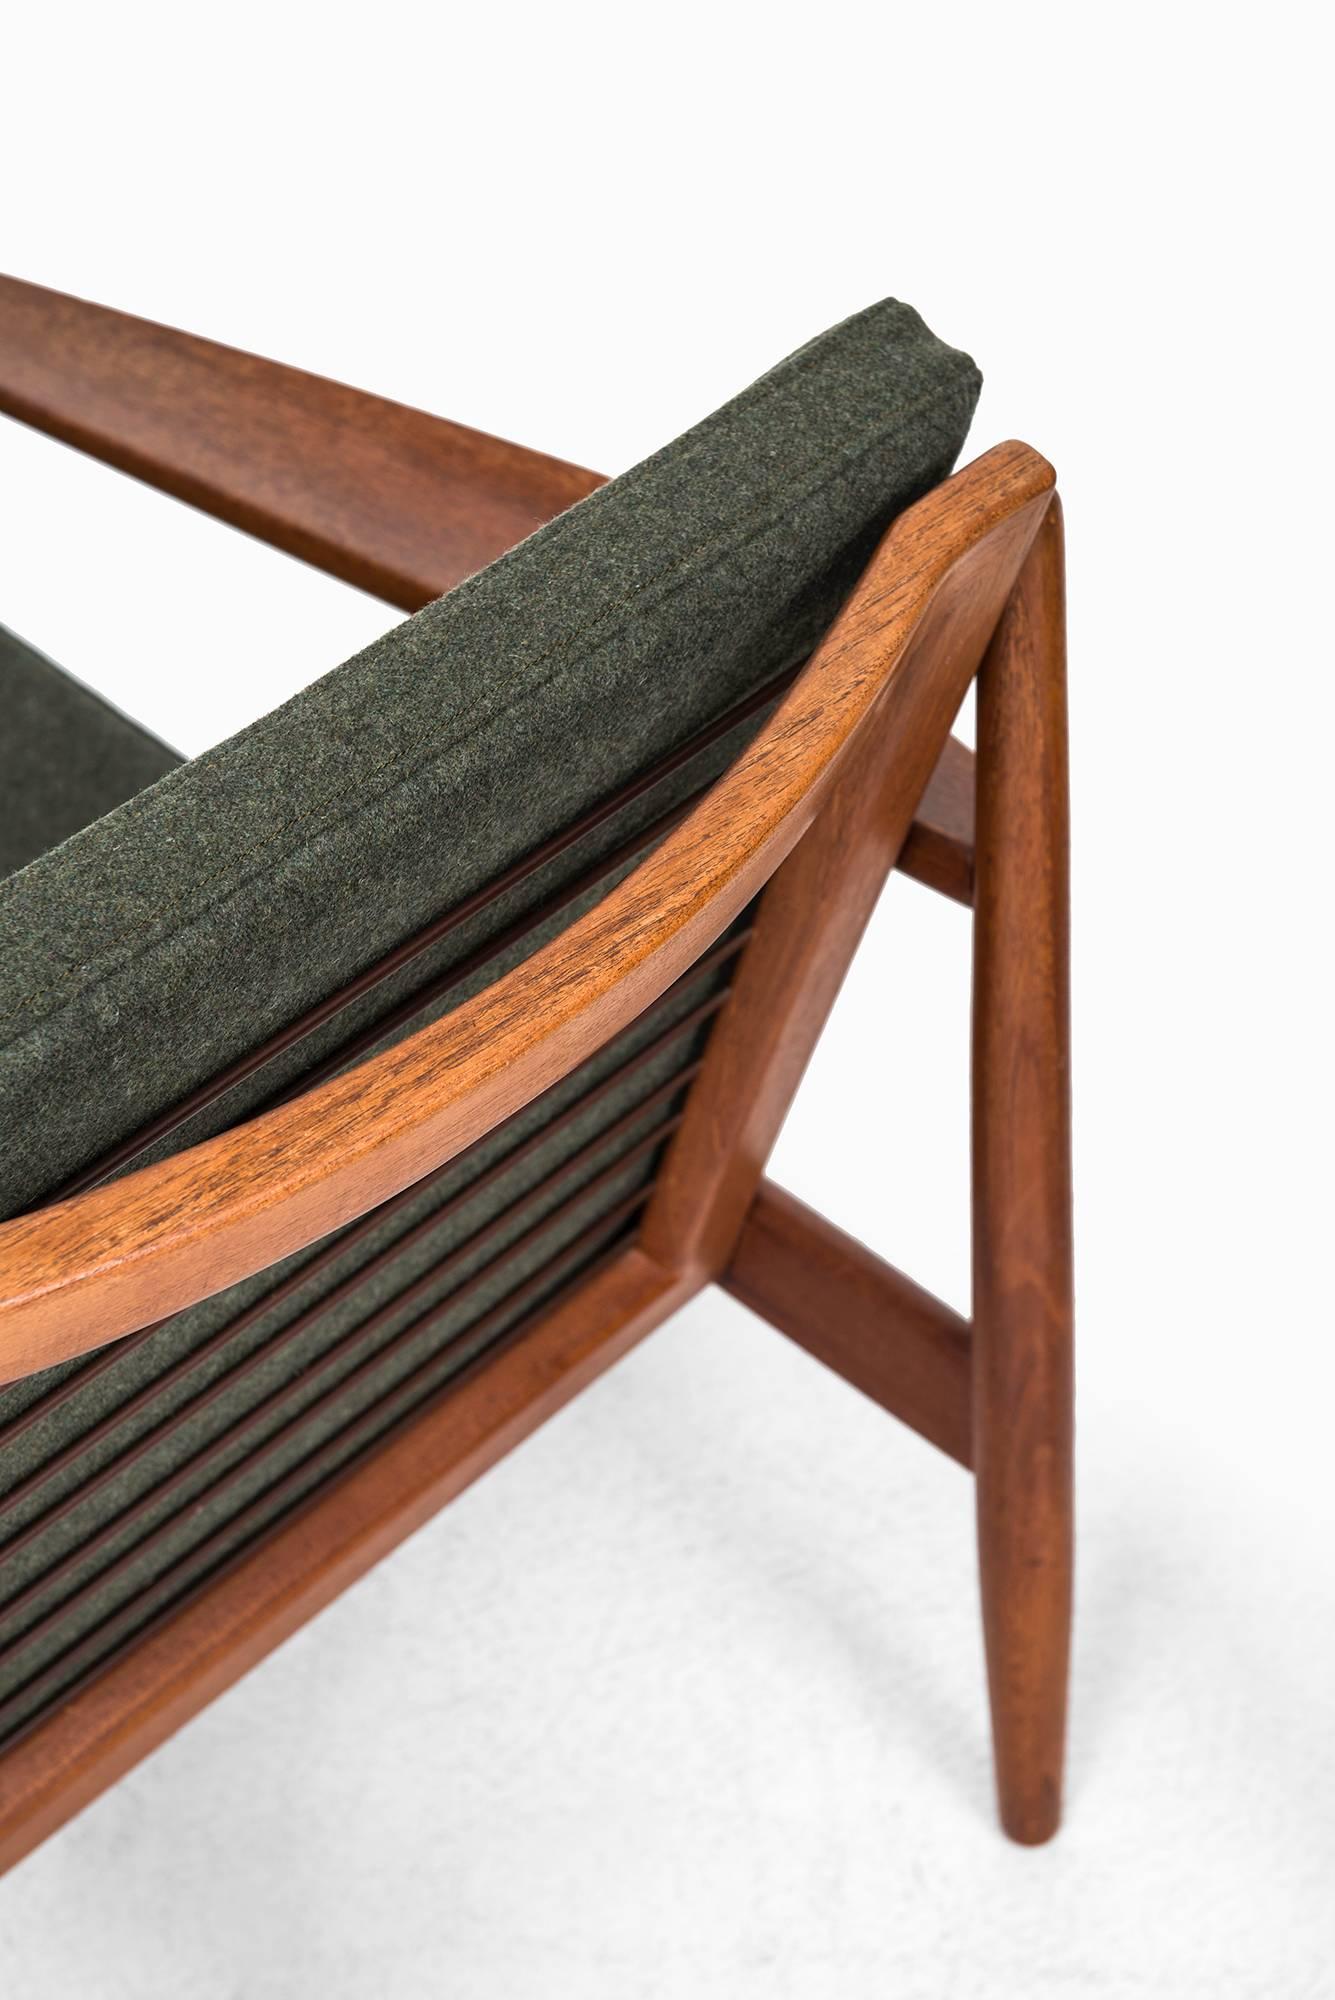 Arne Vodder Easy Chairs Produced by Glostrup Møbelfabrik in Denmark 2